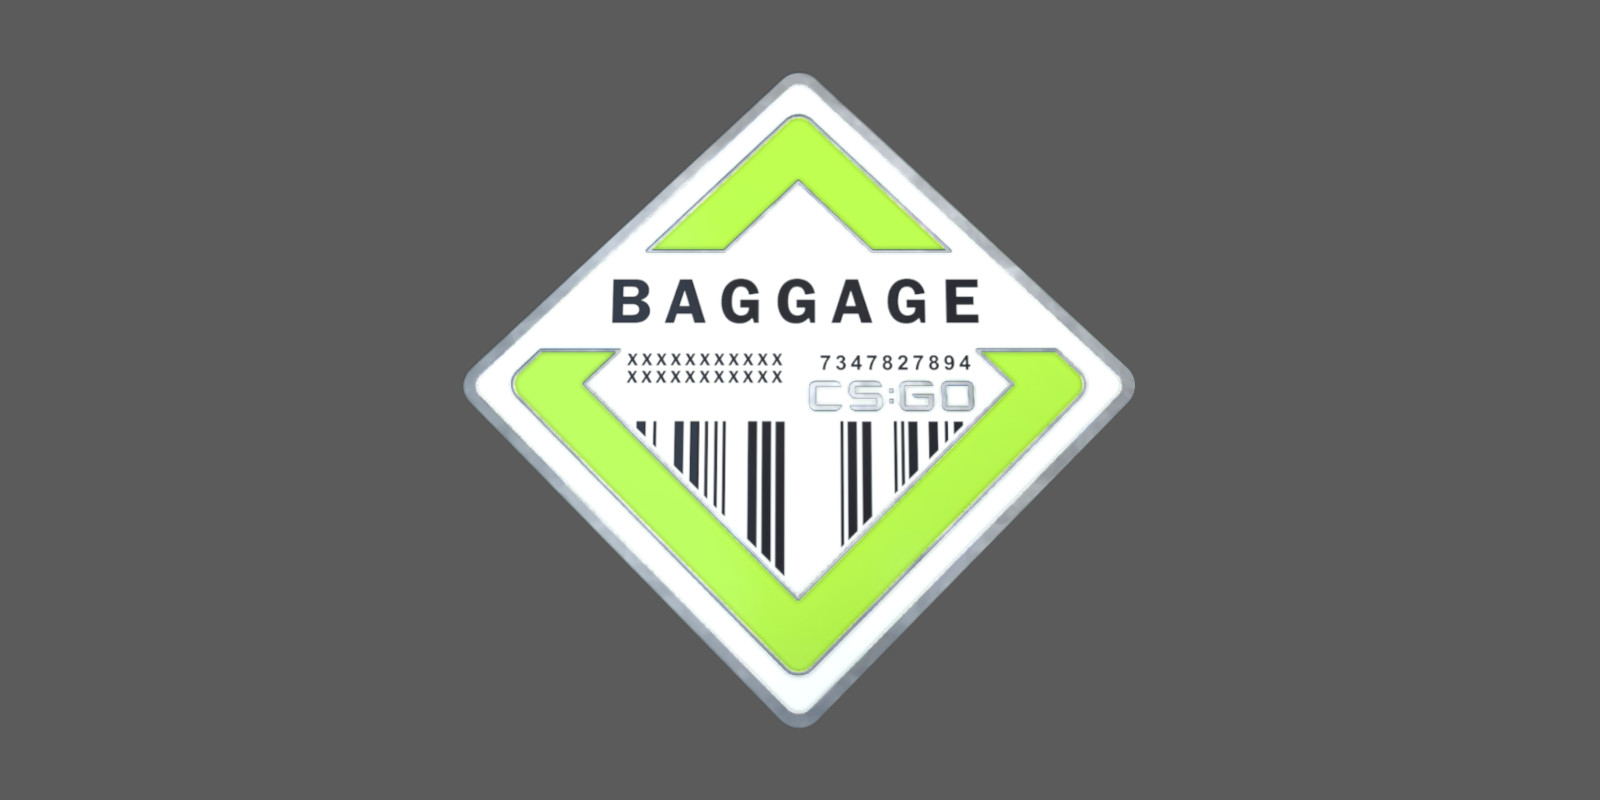 CS:GO - Series 2 - Baggage Collectible Pin